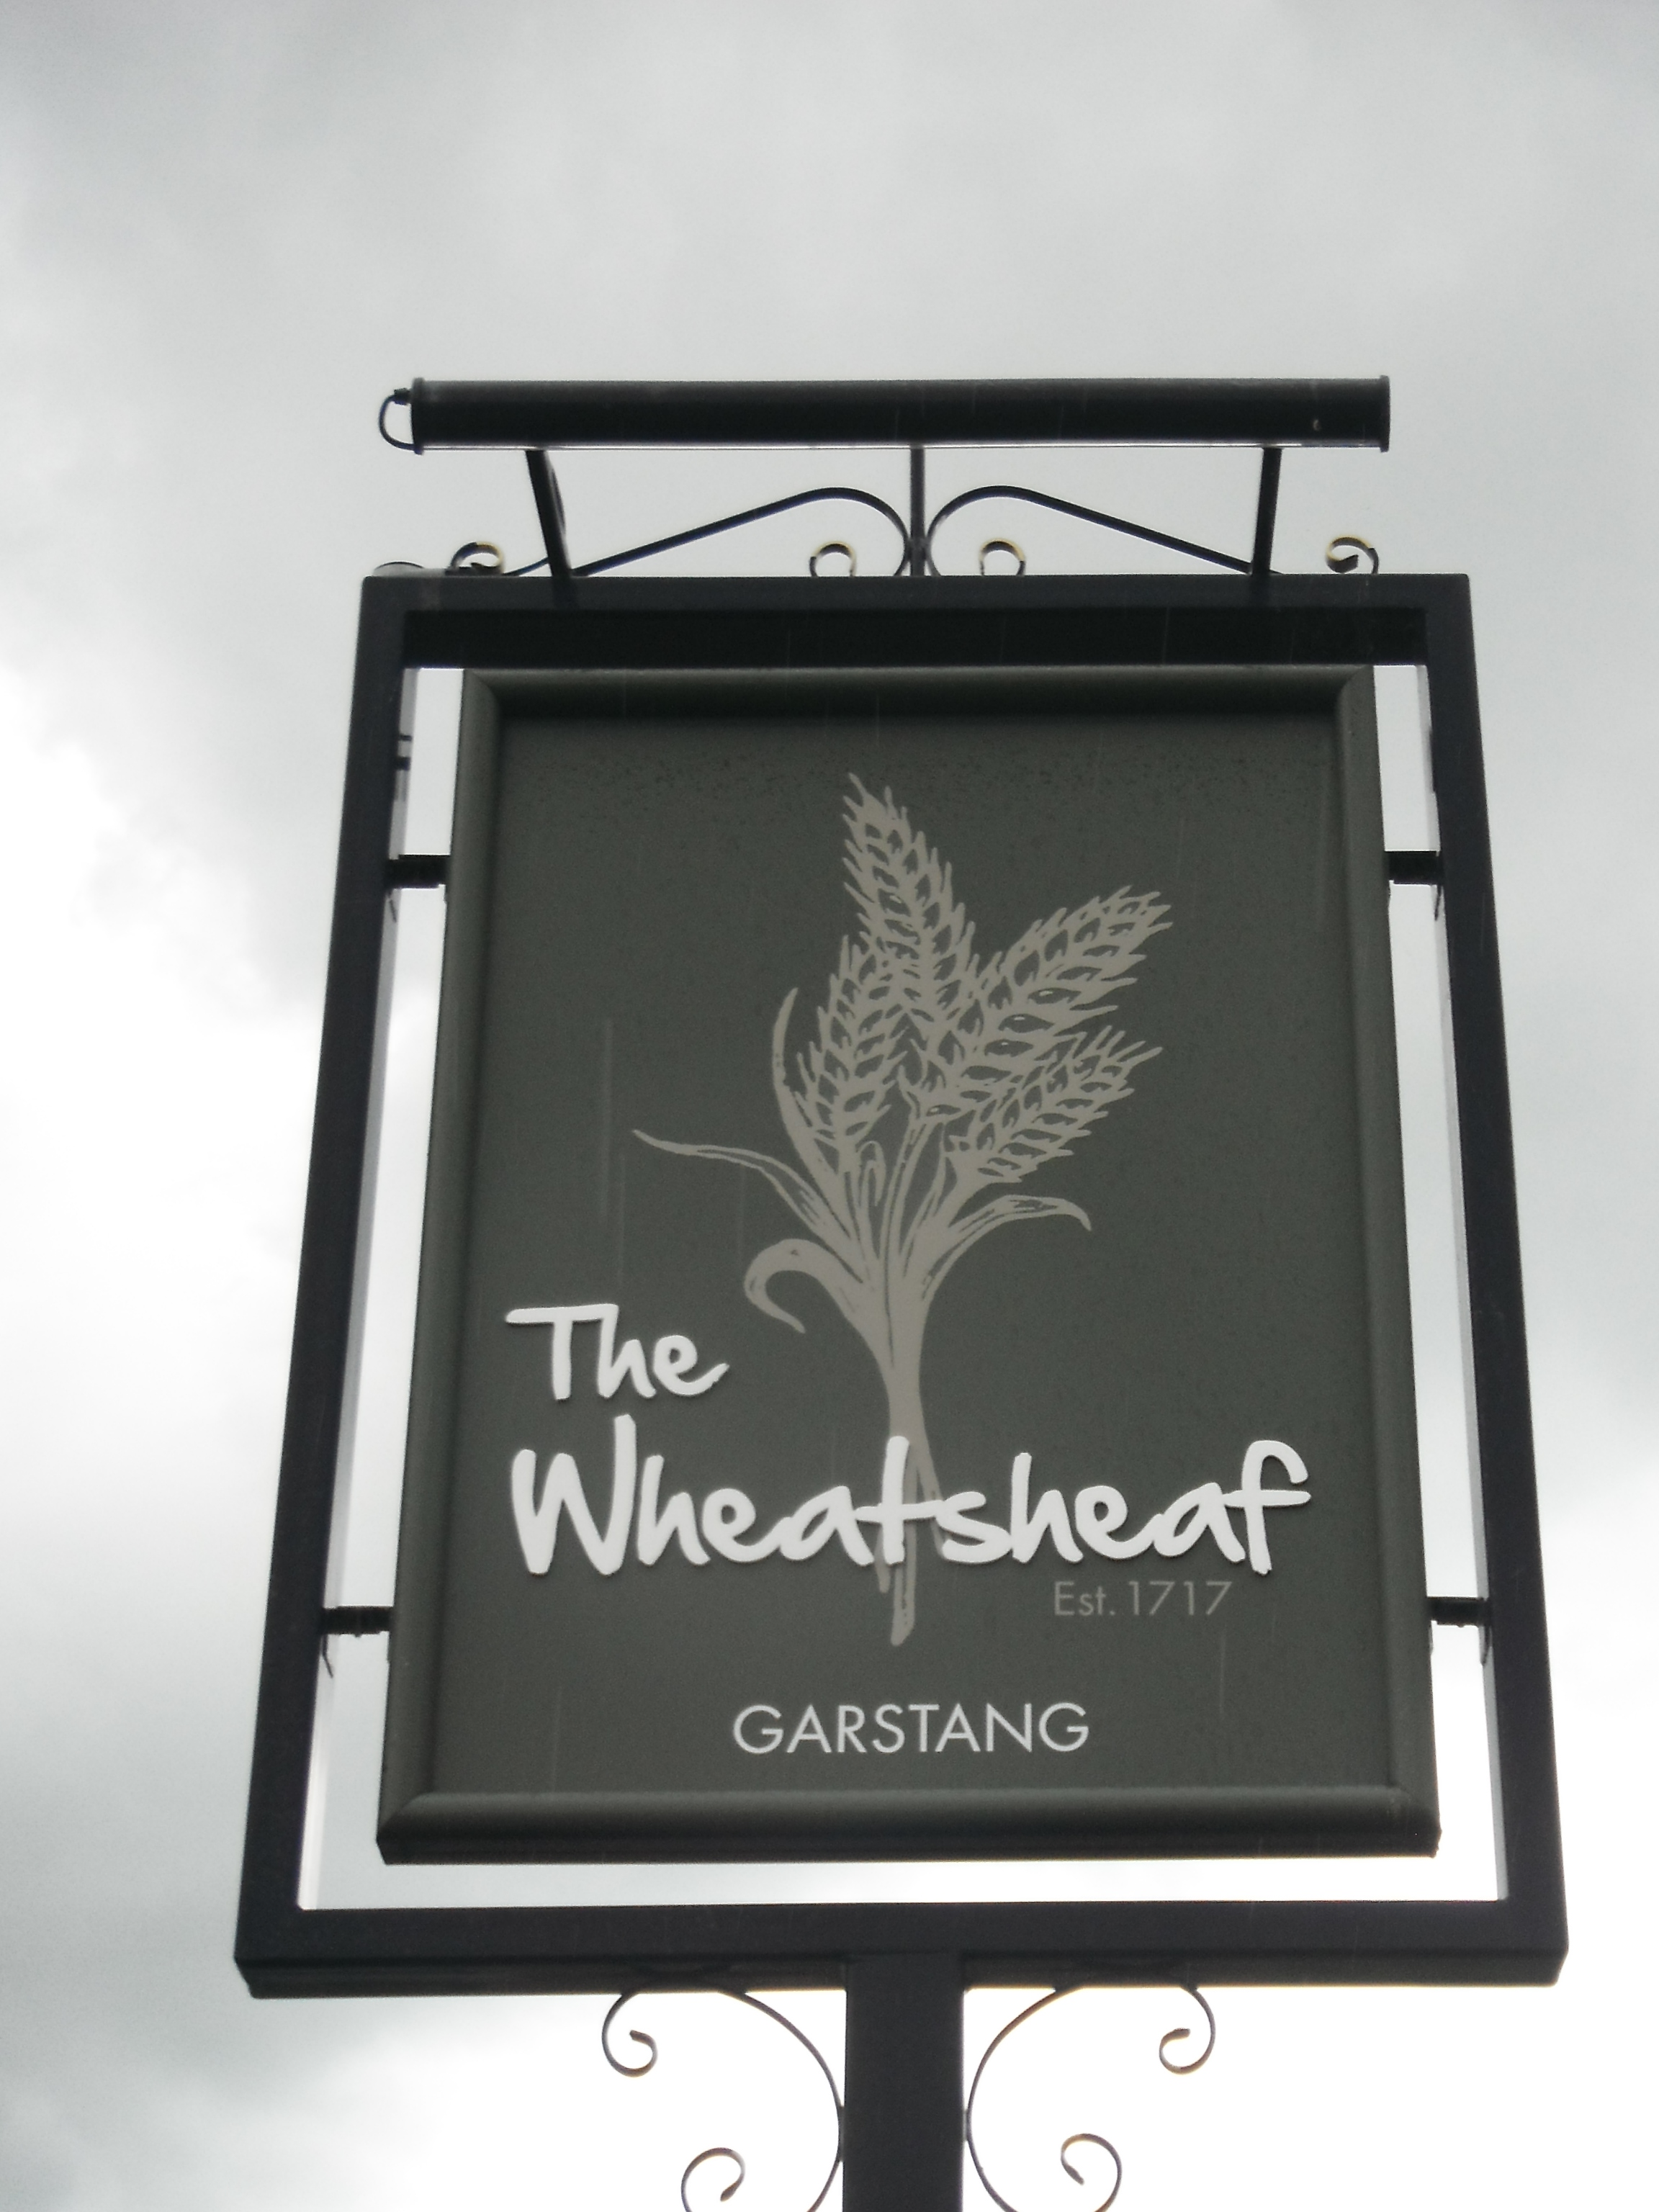 Photo taken by me - pub sign for The Wheatsheaf - Garstang